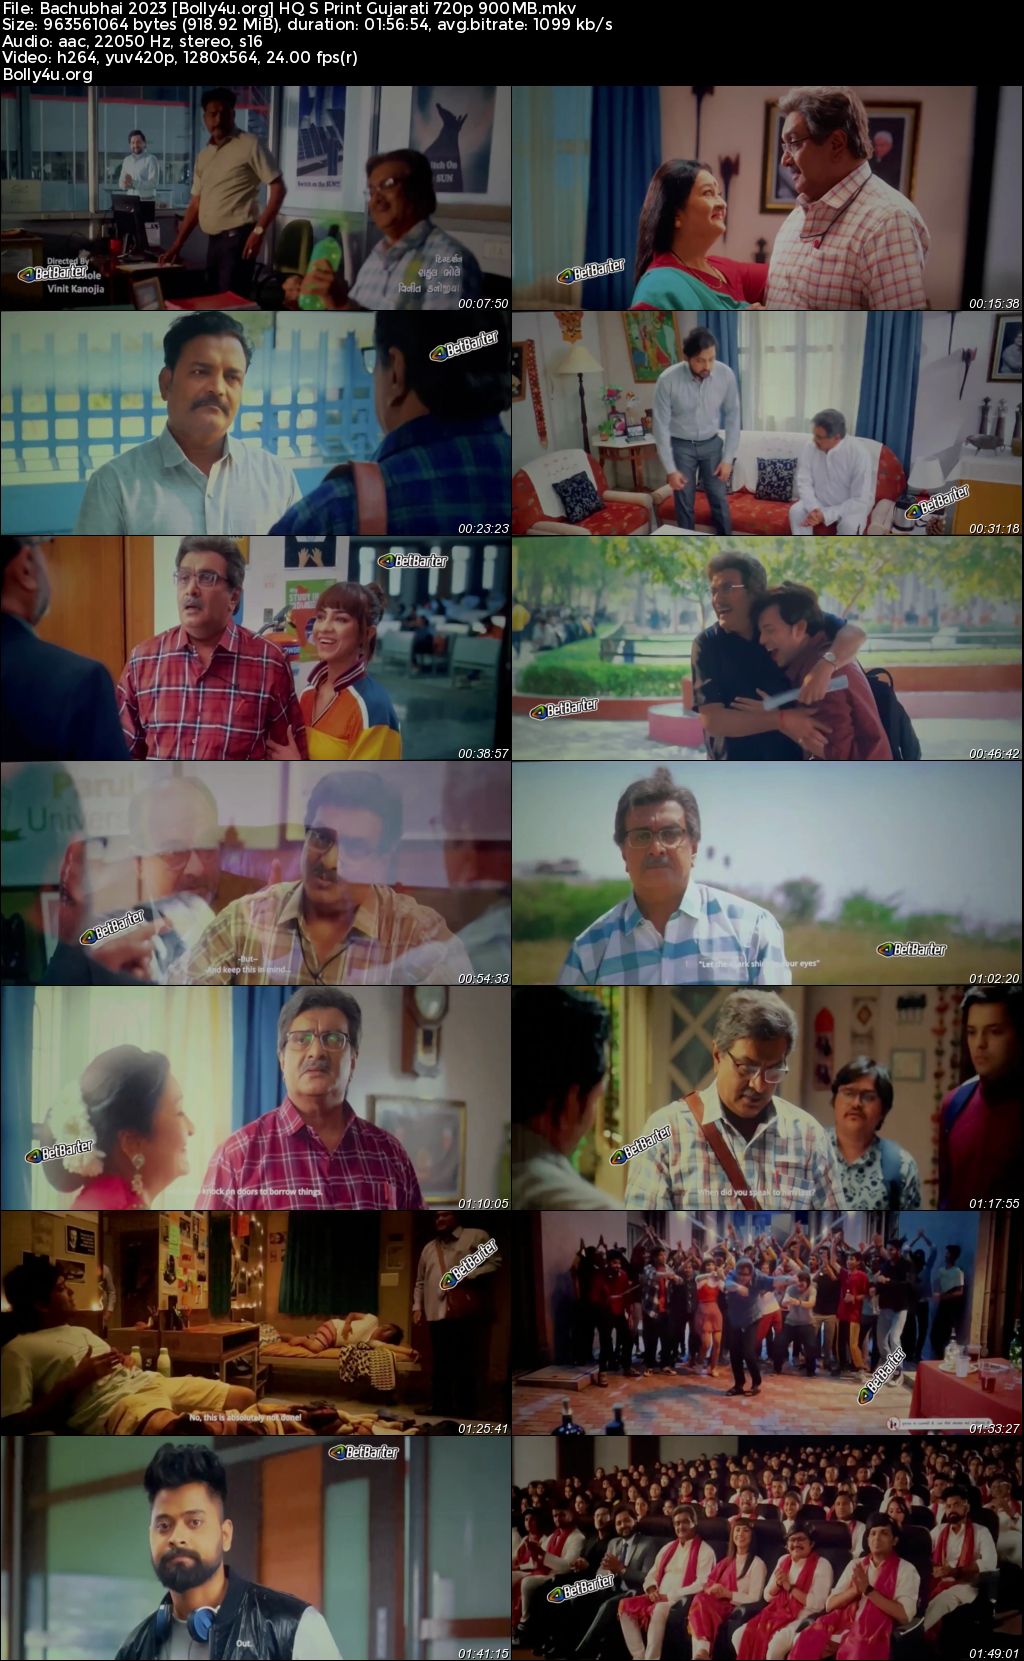 Bachubhai 2023 HQ S Print Gujarati Full Movie Download 720p 480p